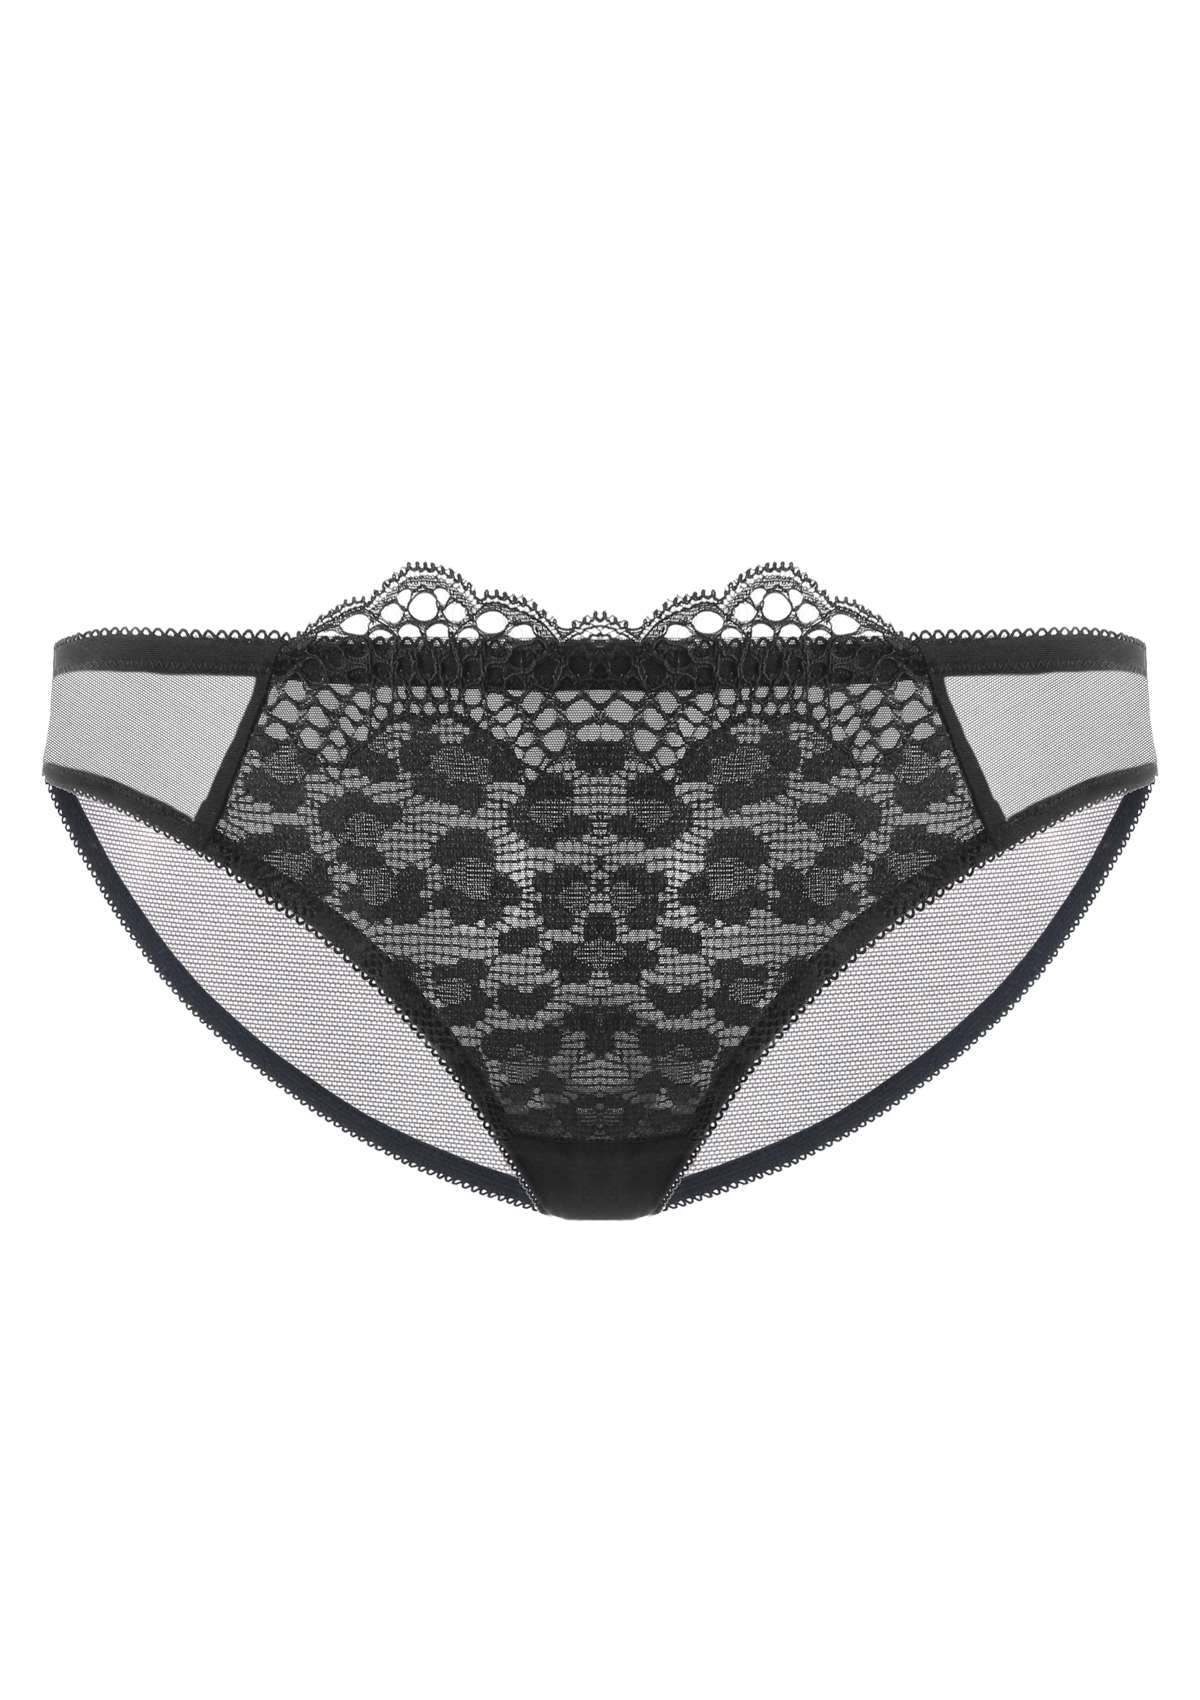 HSIA Leopard-Print Lace Front Mesh Back Bikini Panties - 3 Pack - S / Purple+Black+Gray